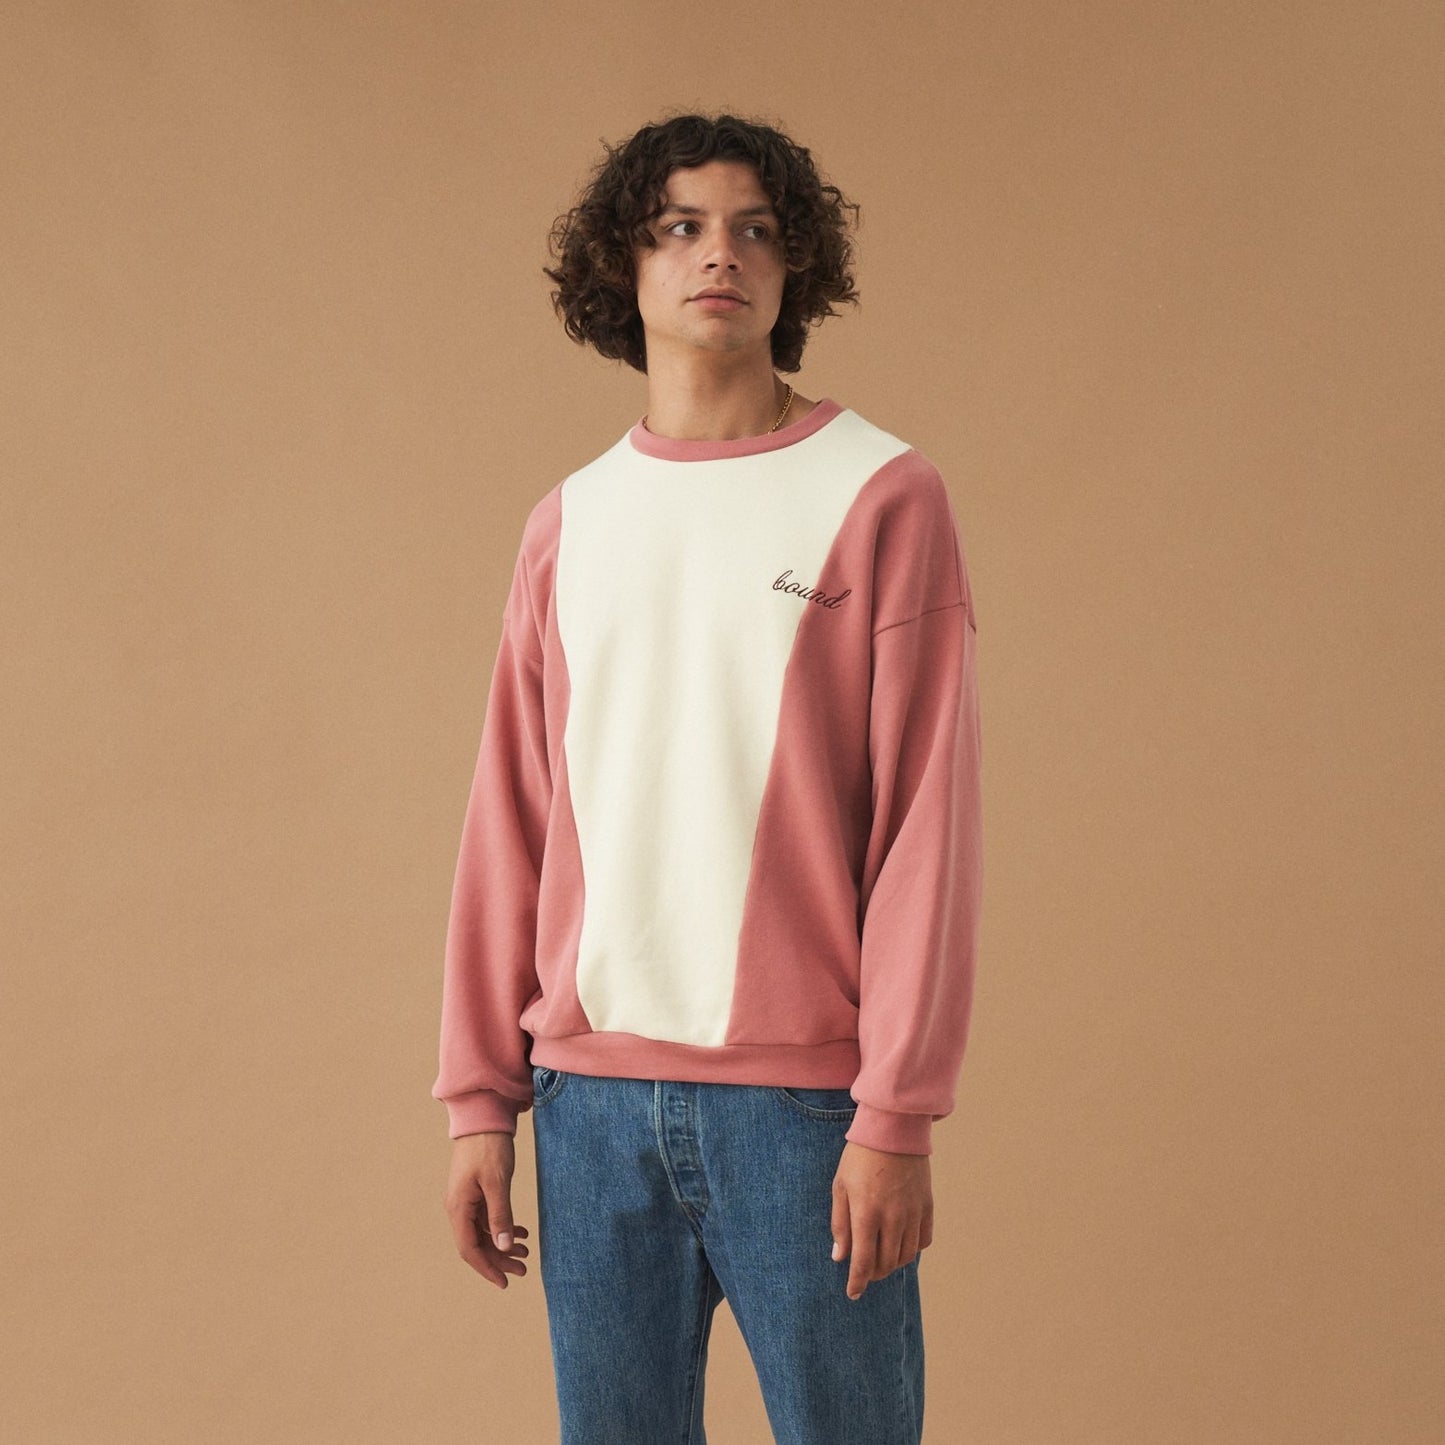 bound 'Berry Crème' Panel Sweater